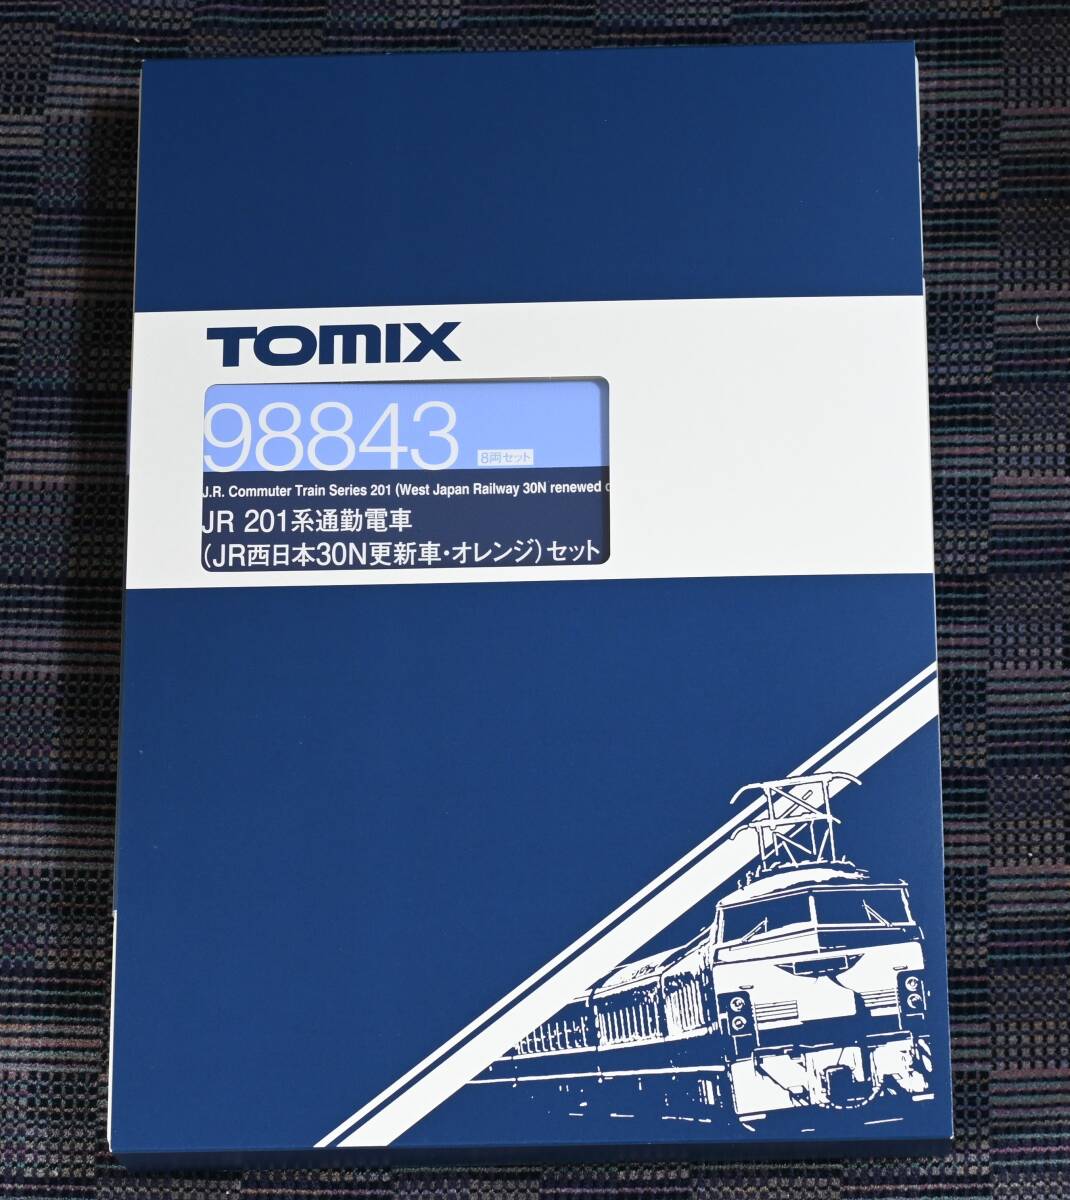 TOMIX トミックス 98843 JR 201系通勤電車 (JR西日本30N更新車・オレンジ) 8両セットの画像2